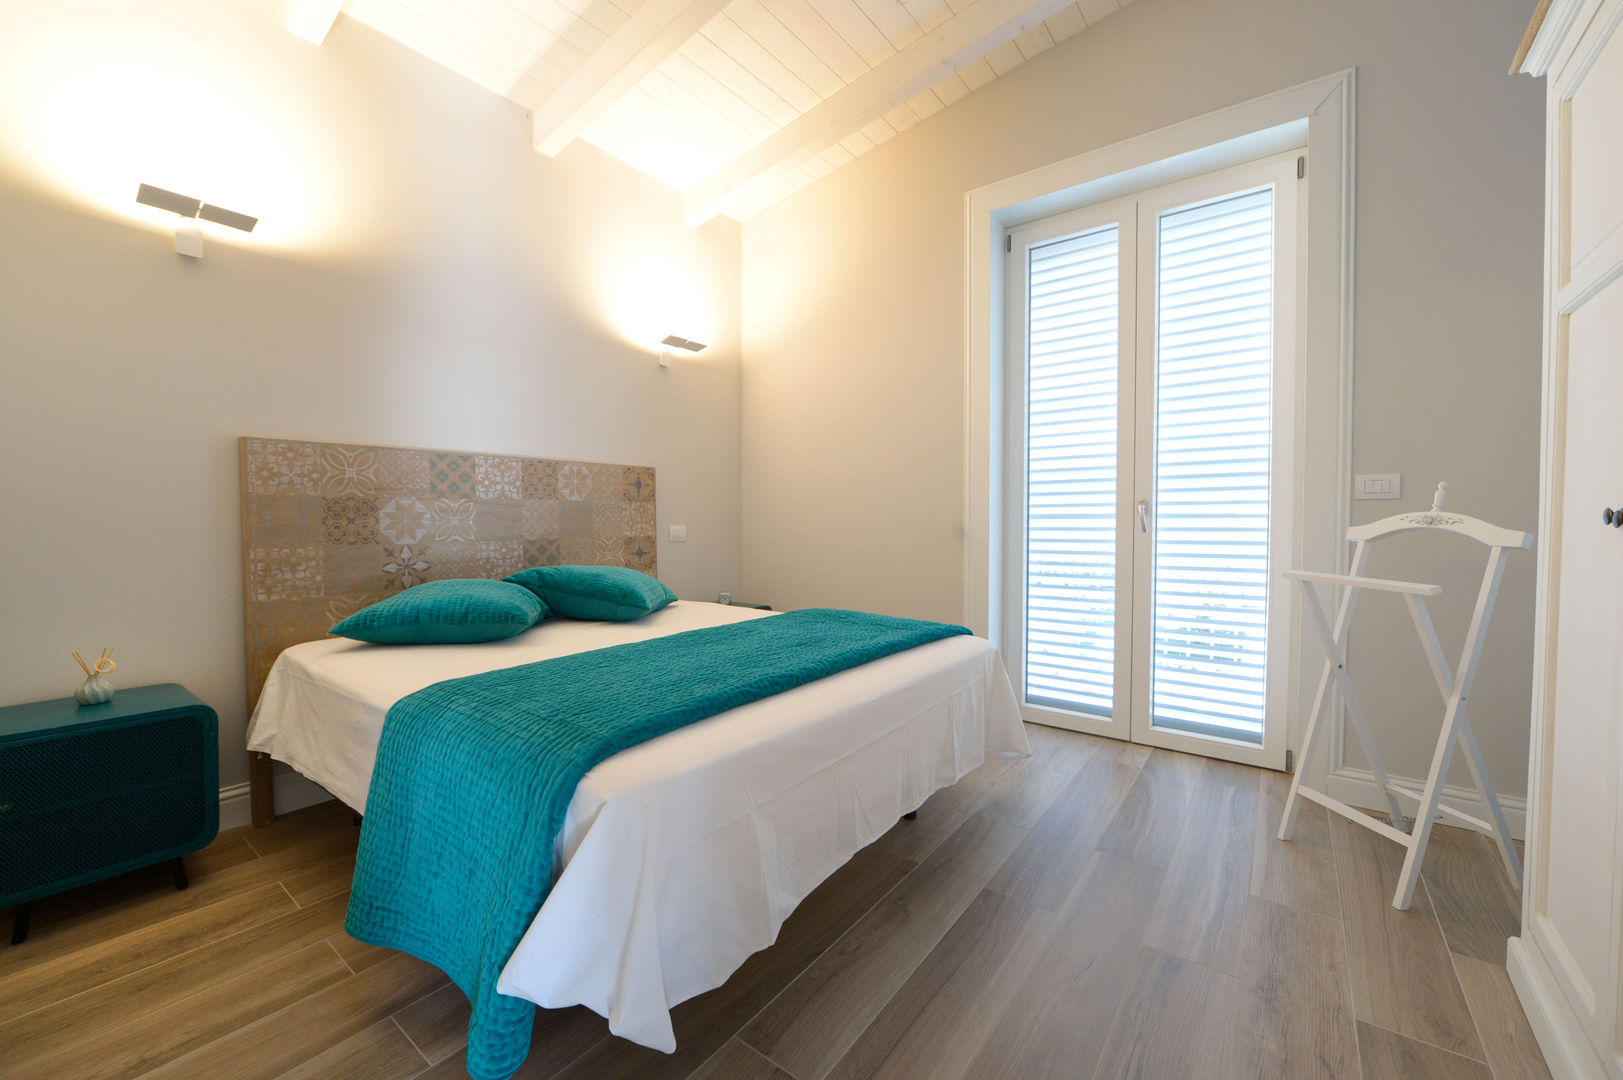 casa Mast, yesHome yesHome Mediterranean style bedroom